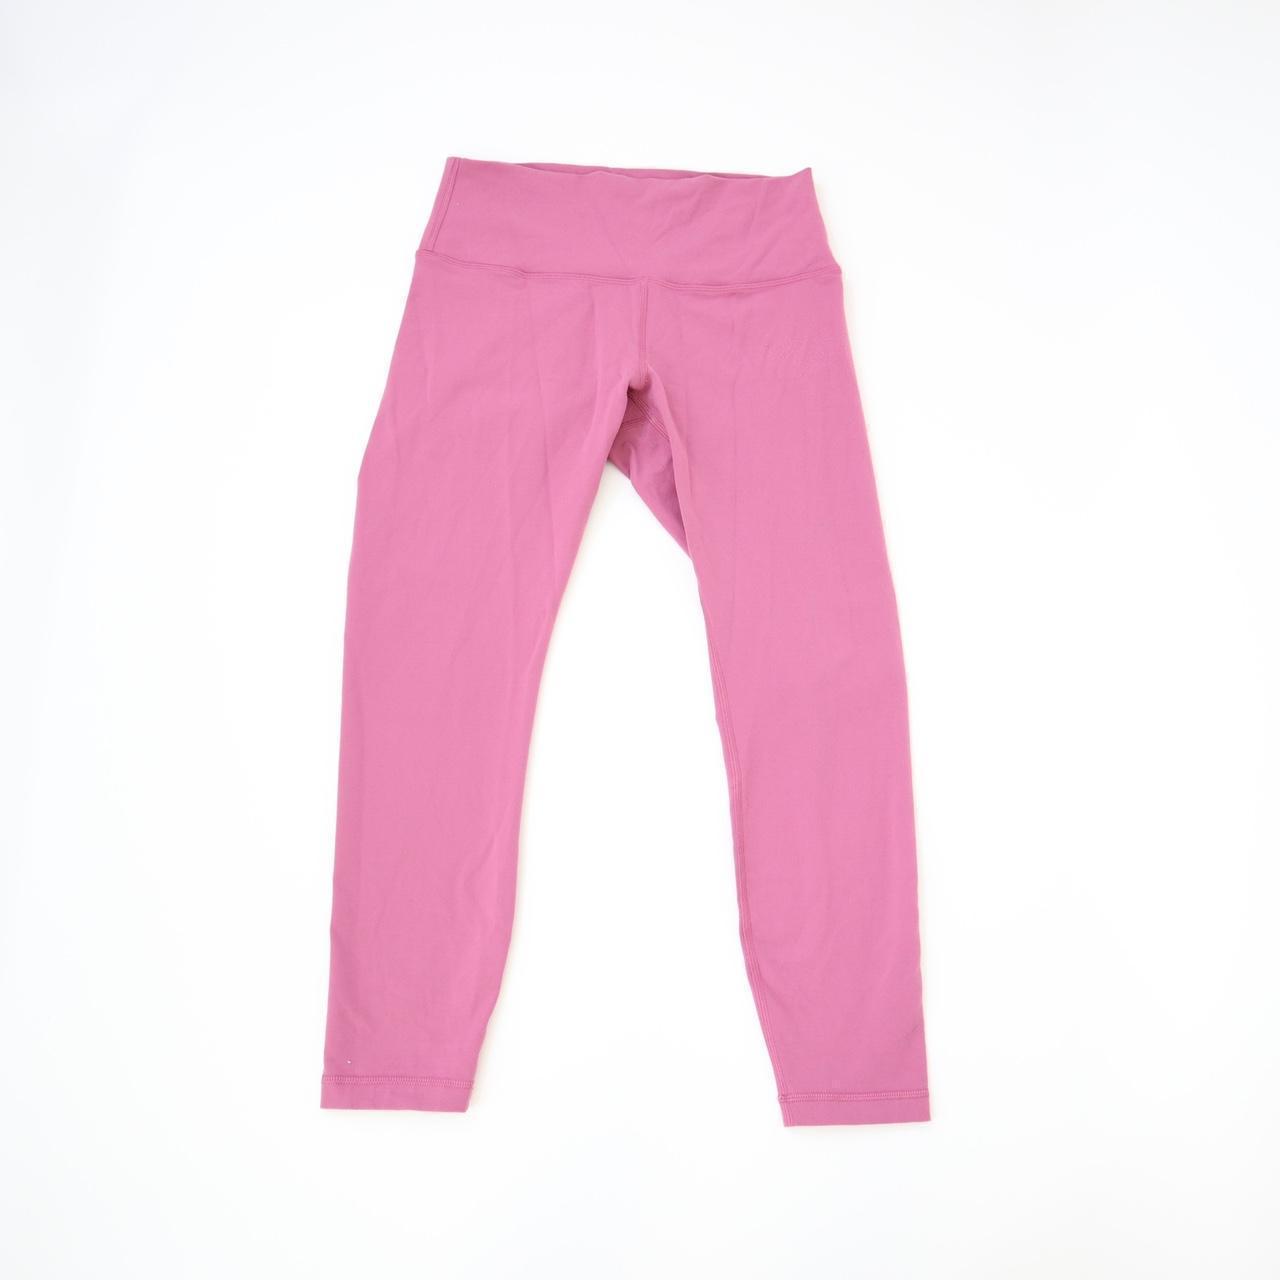 Product Image 1 - Pink lululemon leggings
Cute pink SHORT